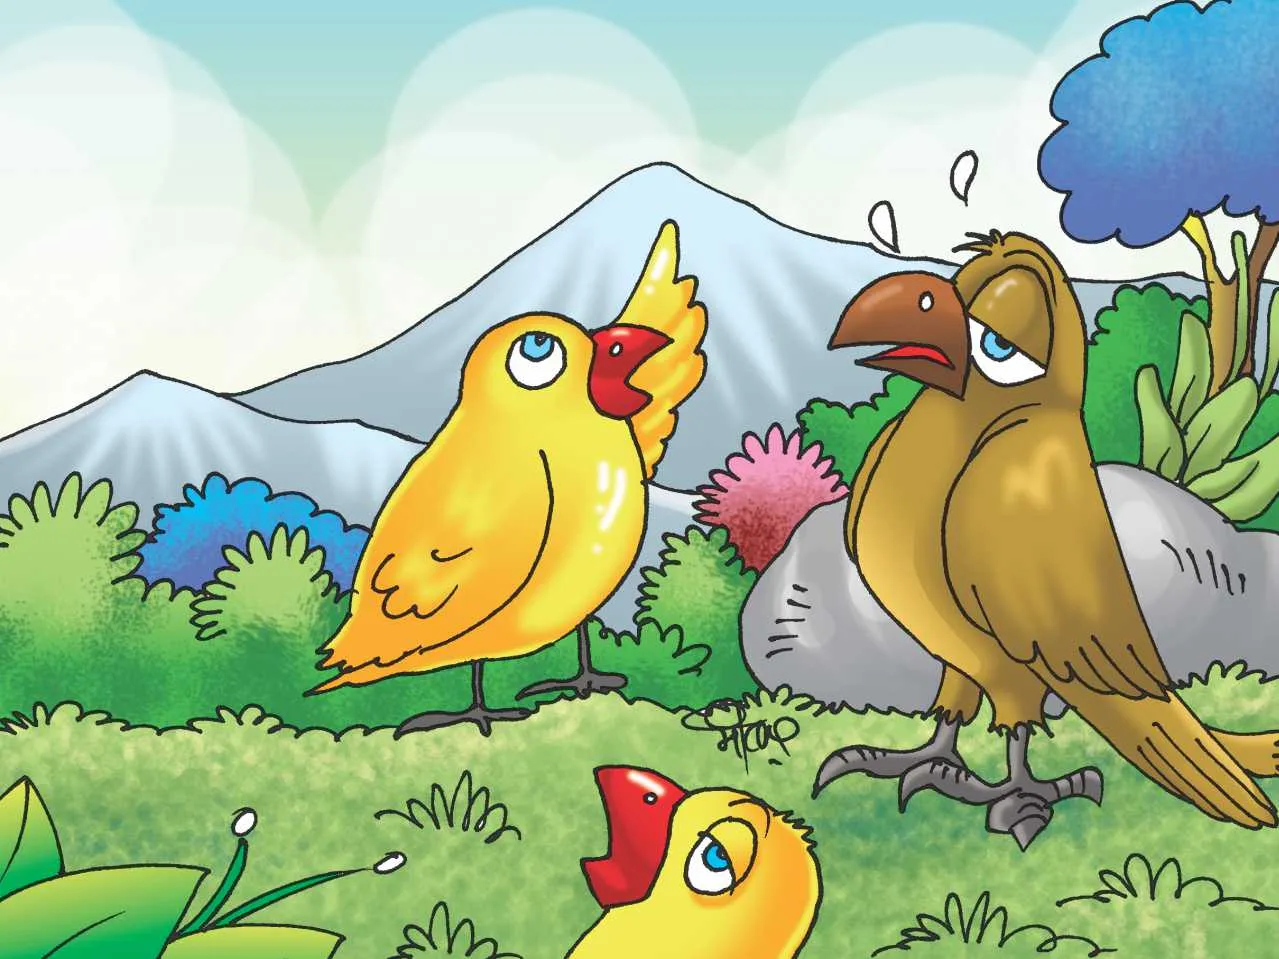 Eagle and chicks cartoon image